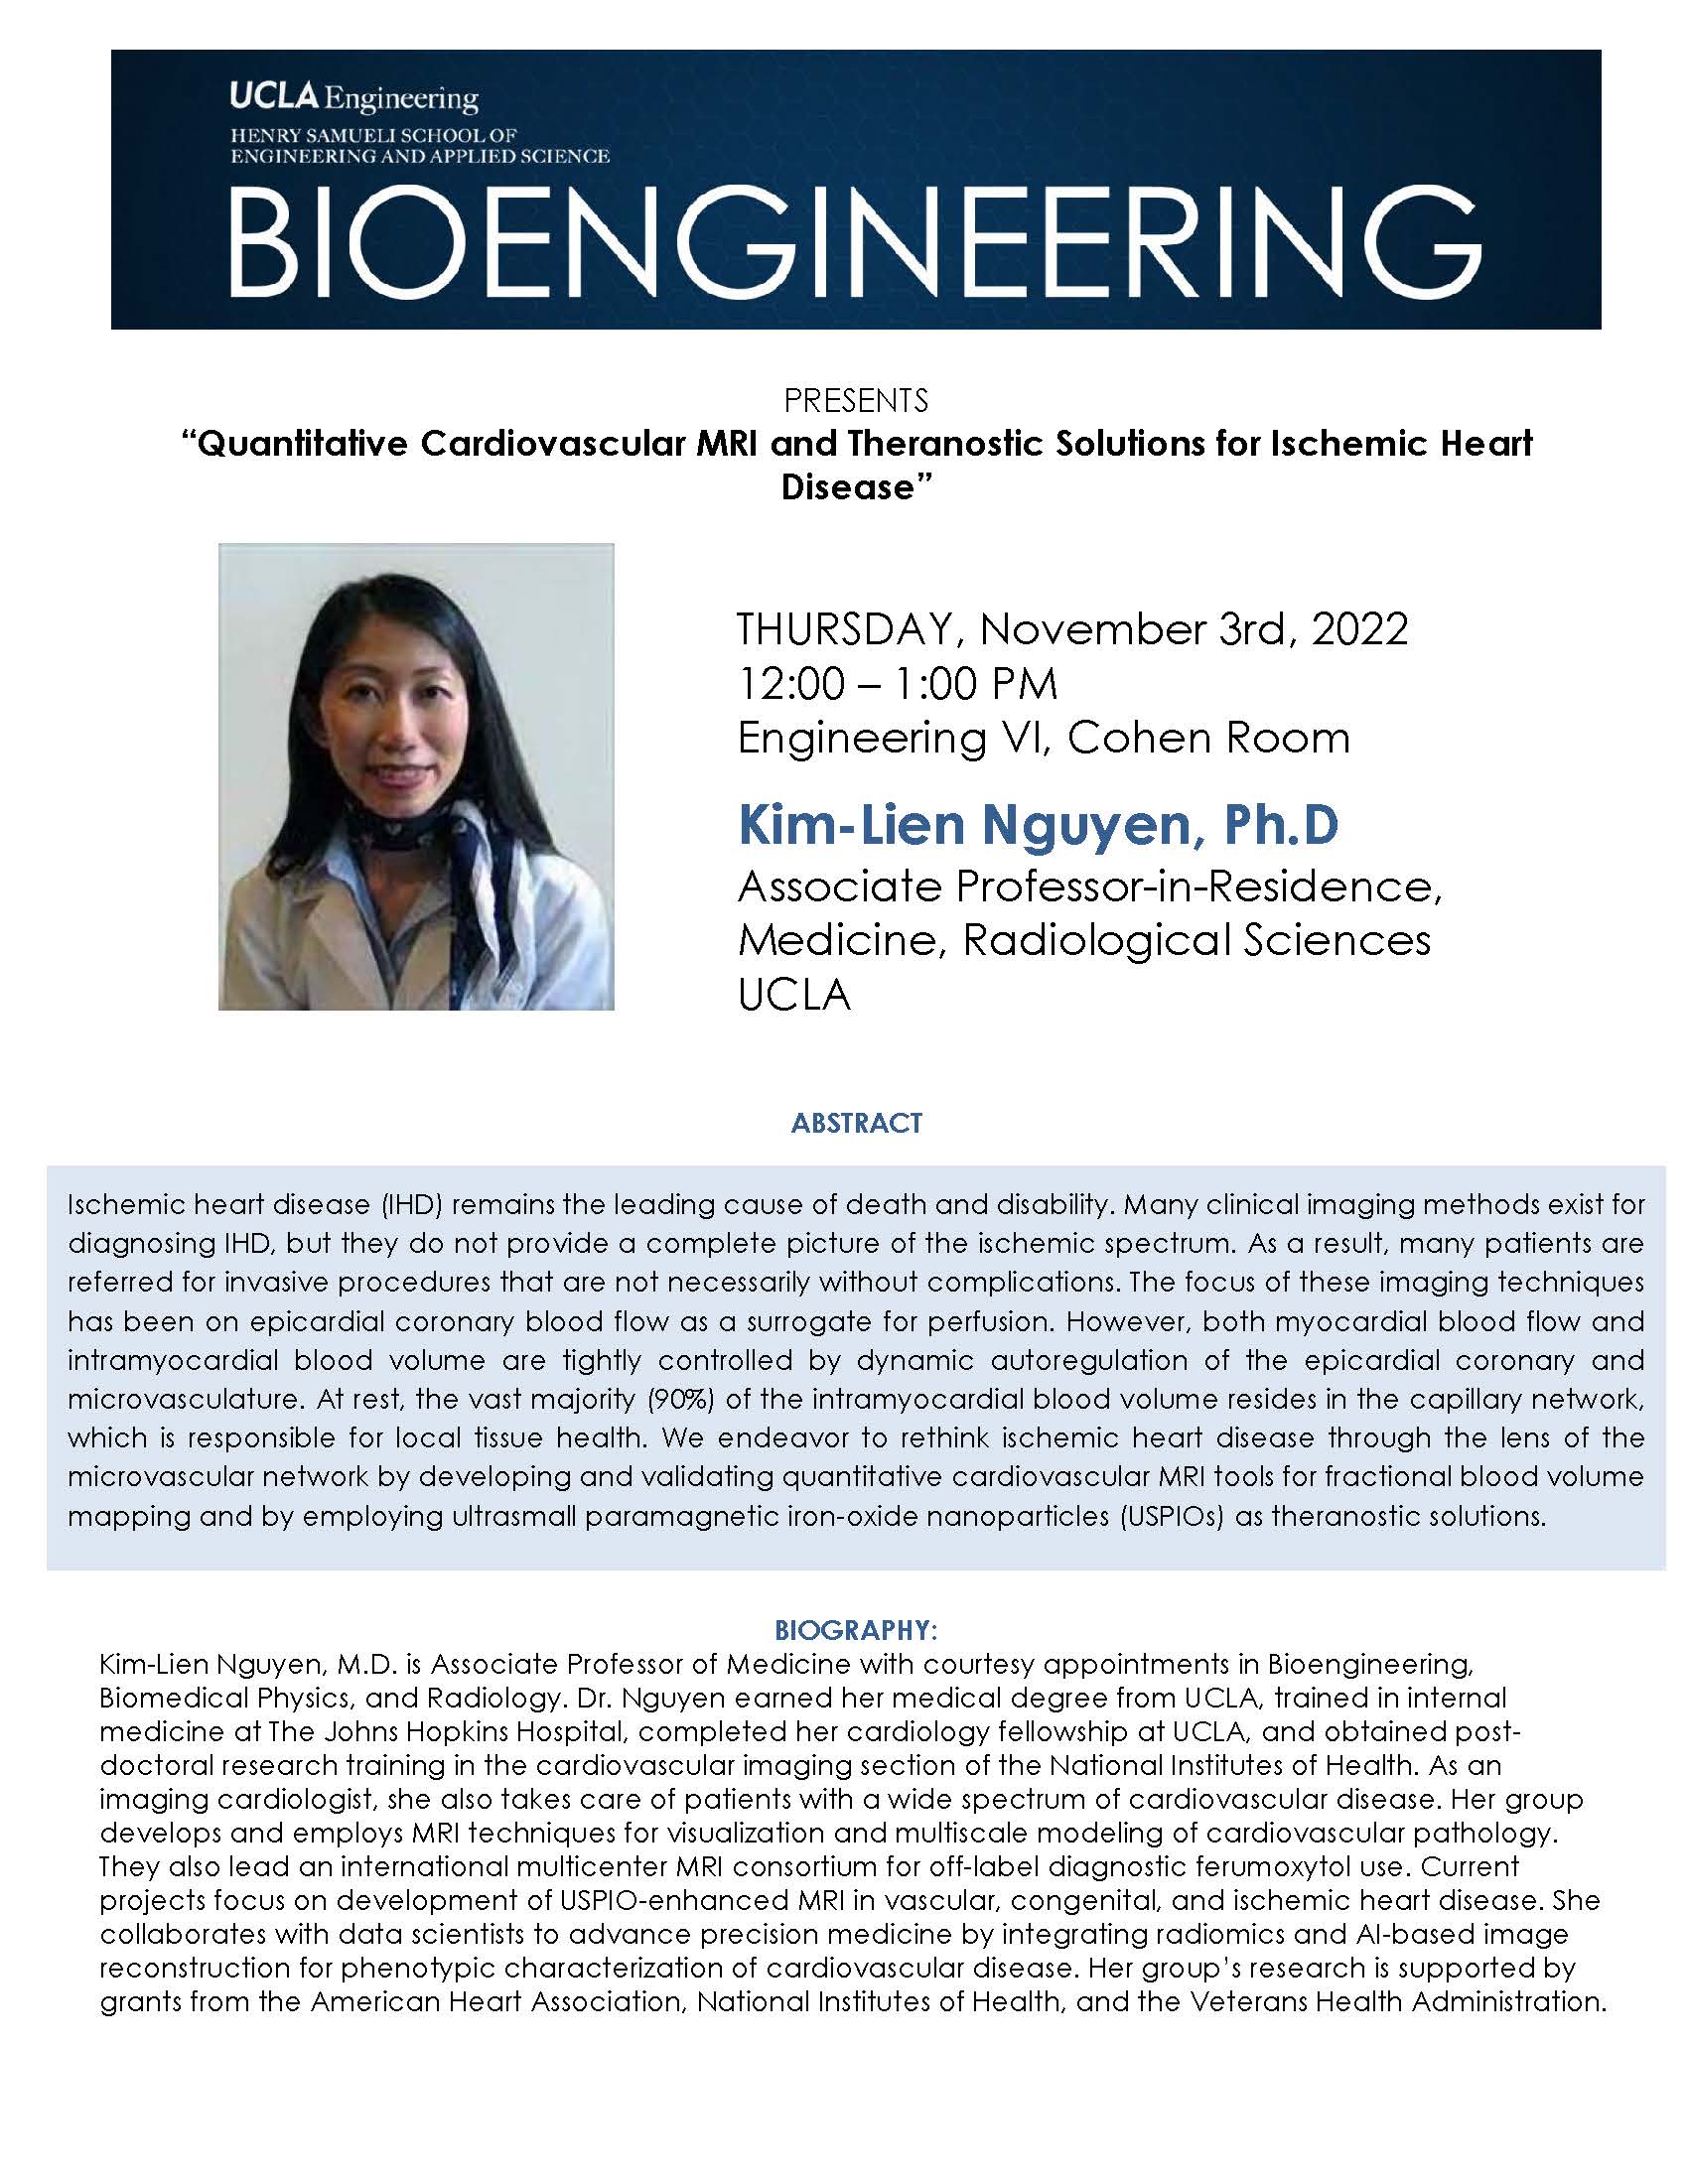 BE 299 Seminar Talk: Kim-Lien Nguyen